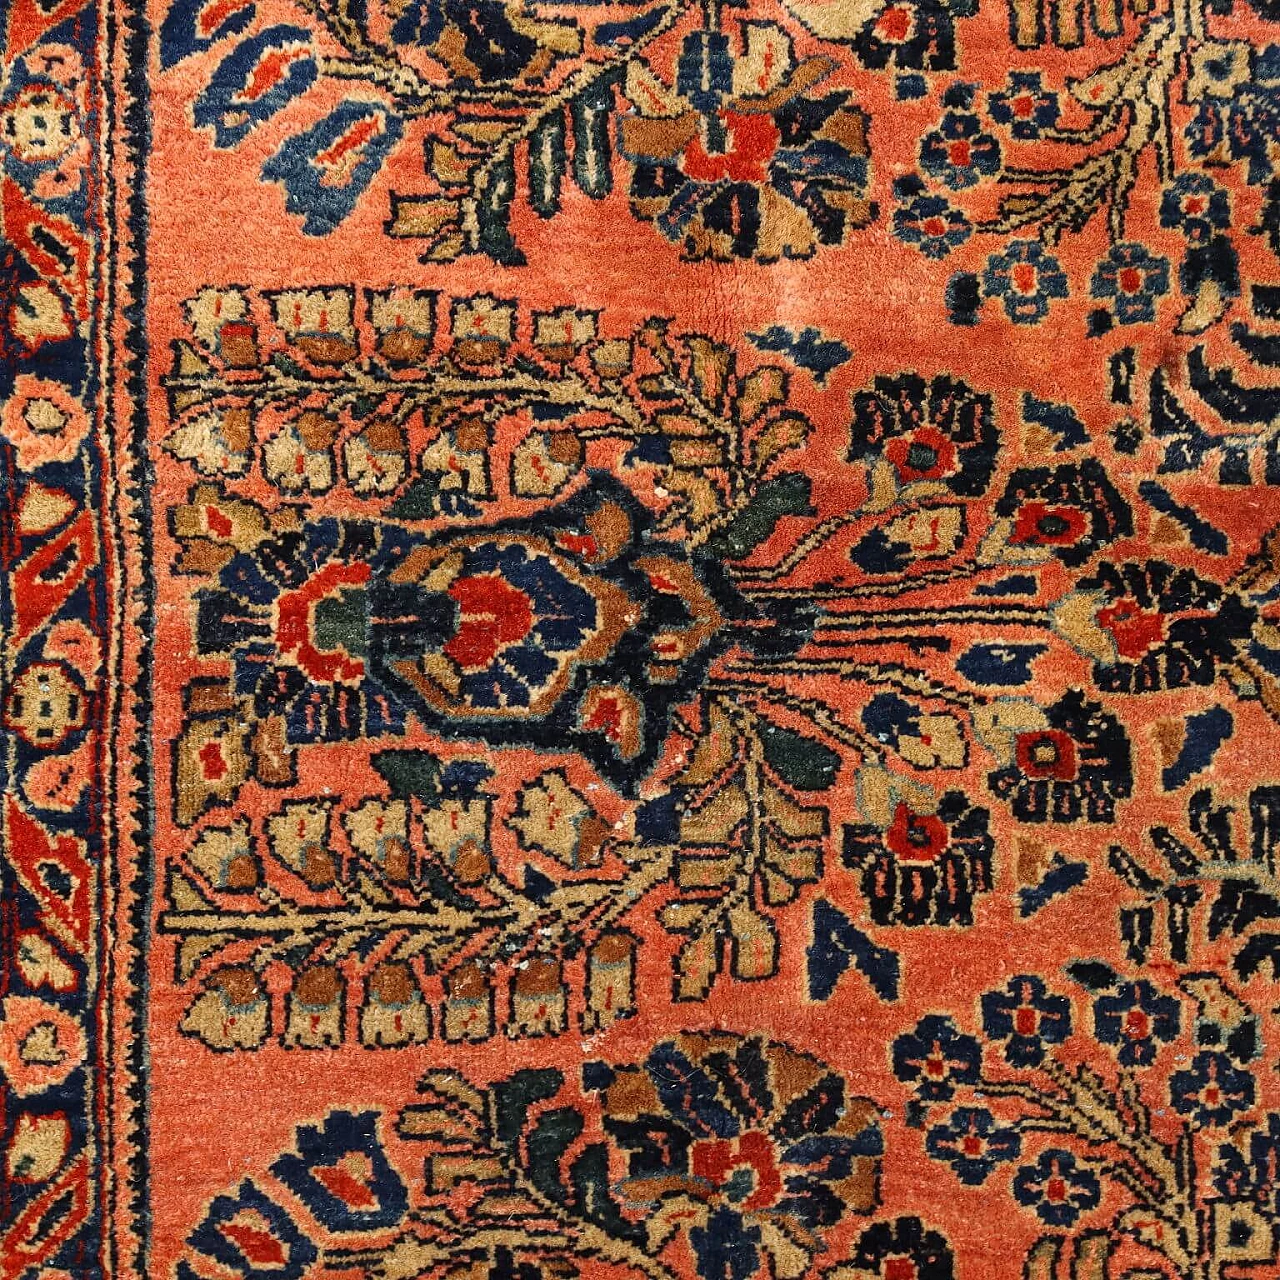 Iranian Saruk American cotton and wool carpet 5